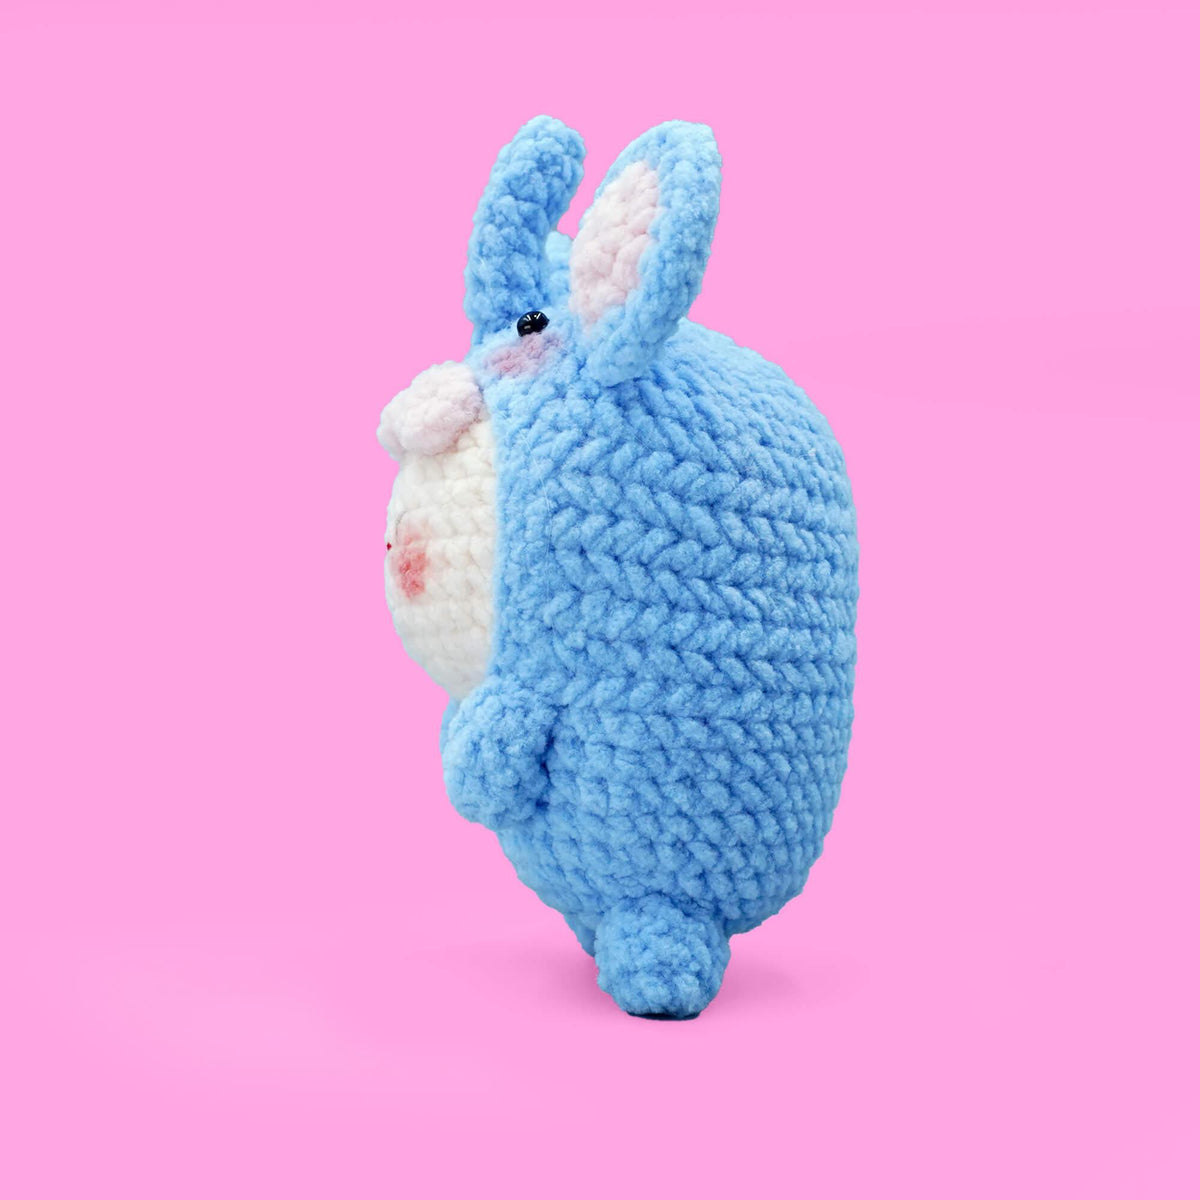 Cuddly Elephant Animal Crochet Kit - HiCrochet